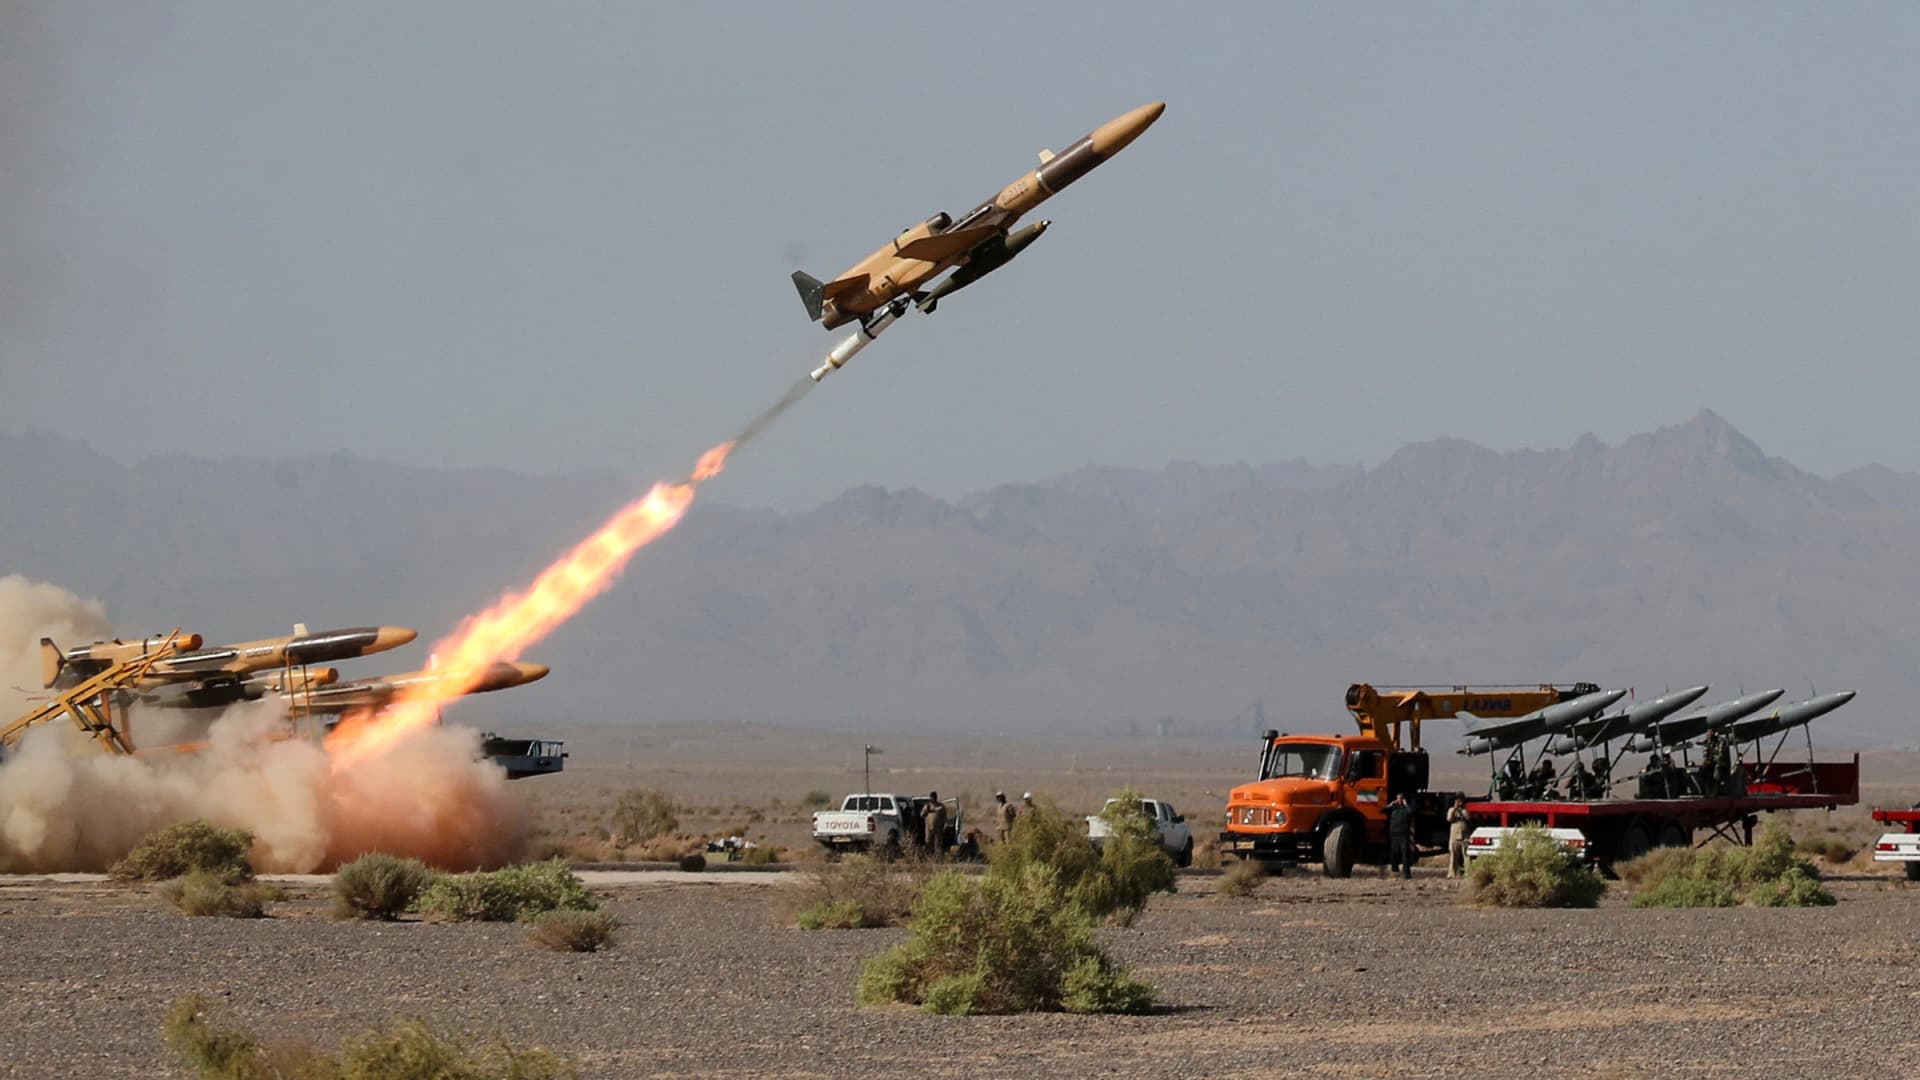 Oil prices higher after Iran-linked drone strikes kill three U.S. troops, Biden vows retaliation